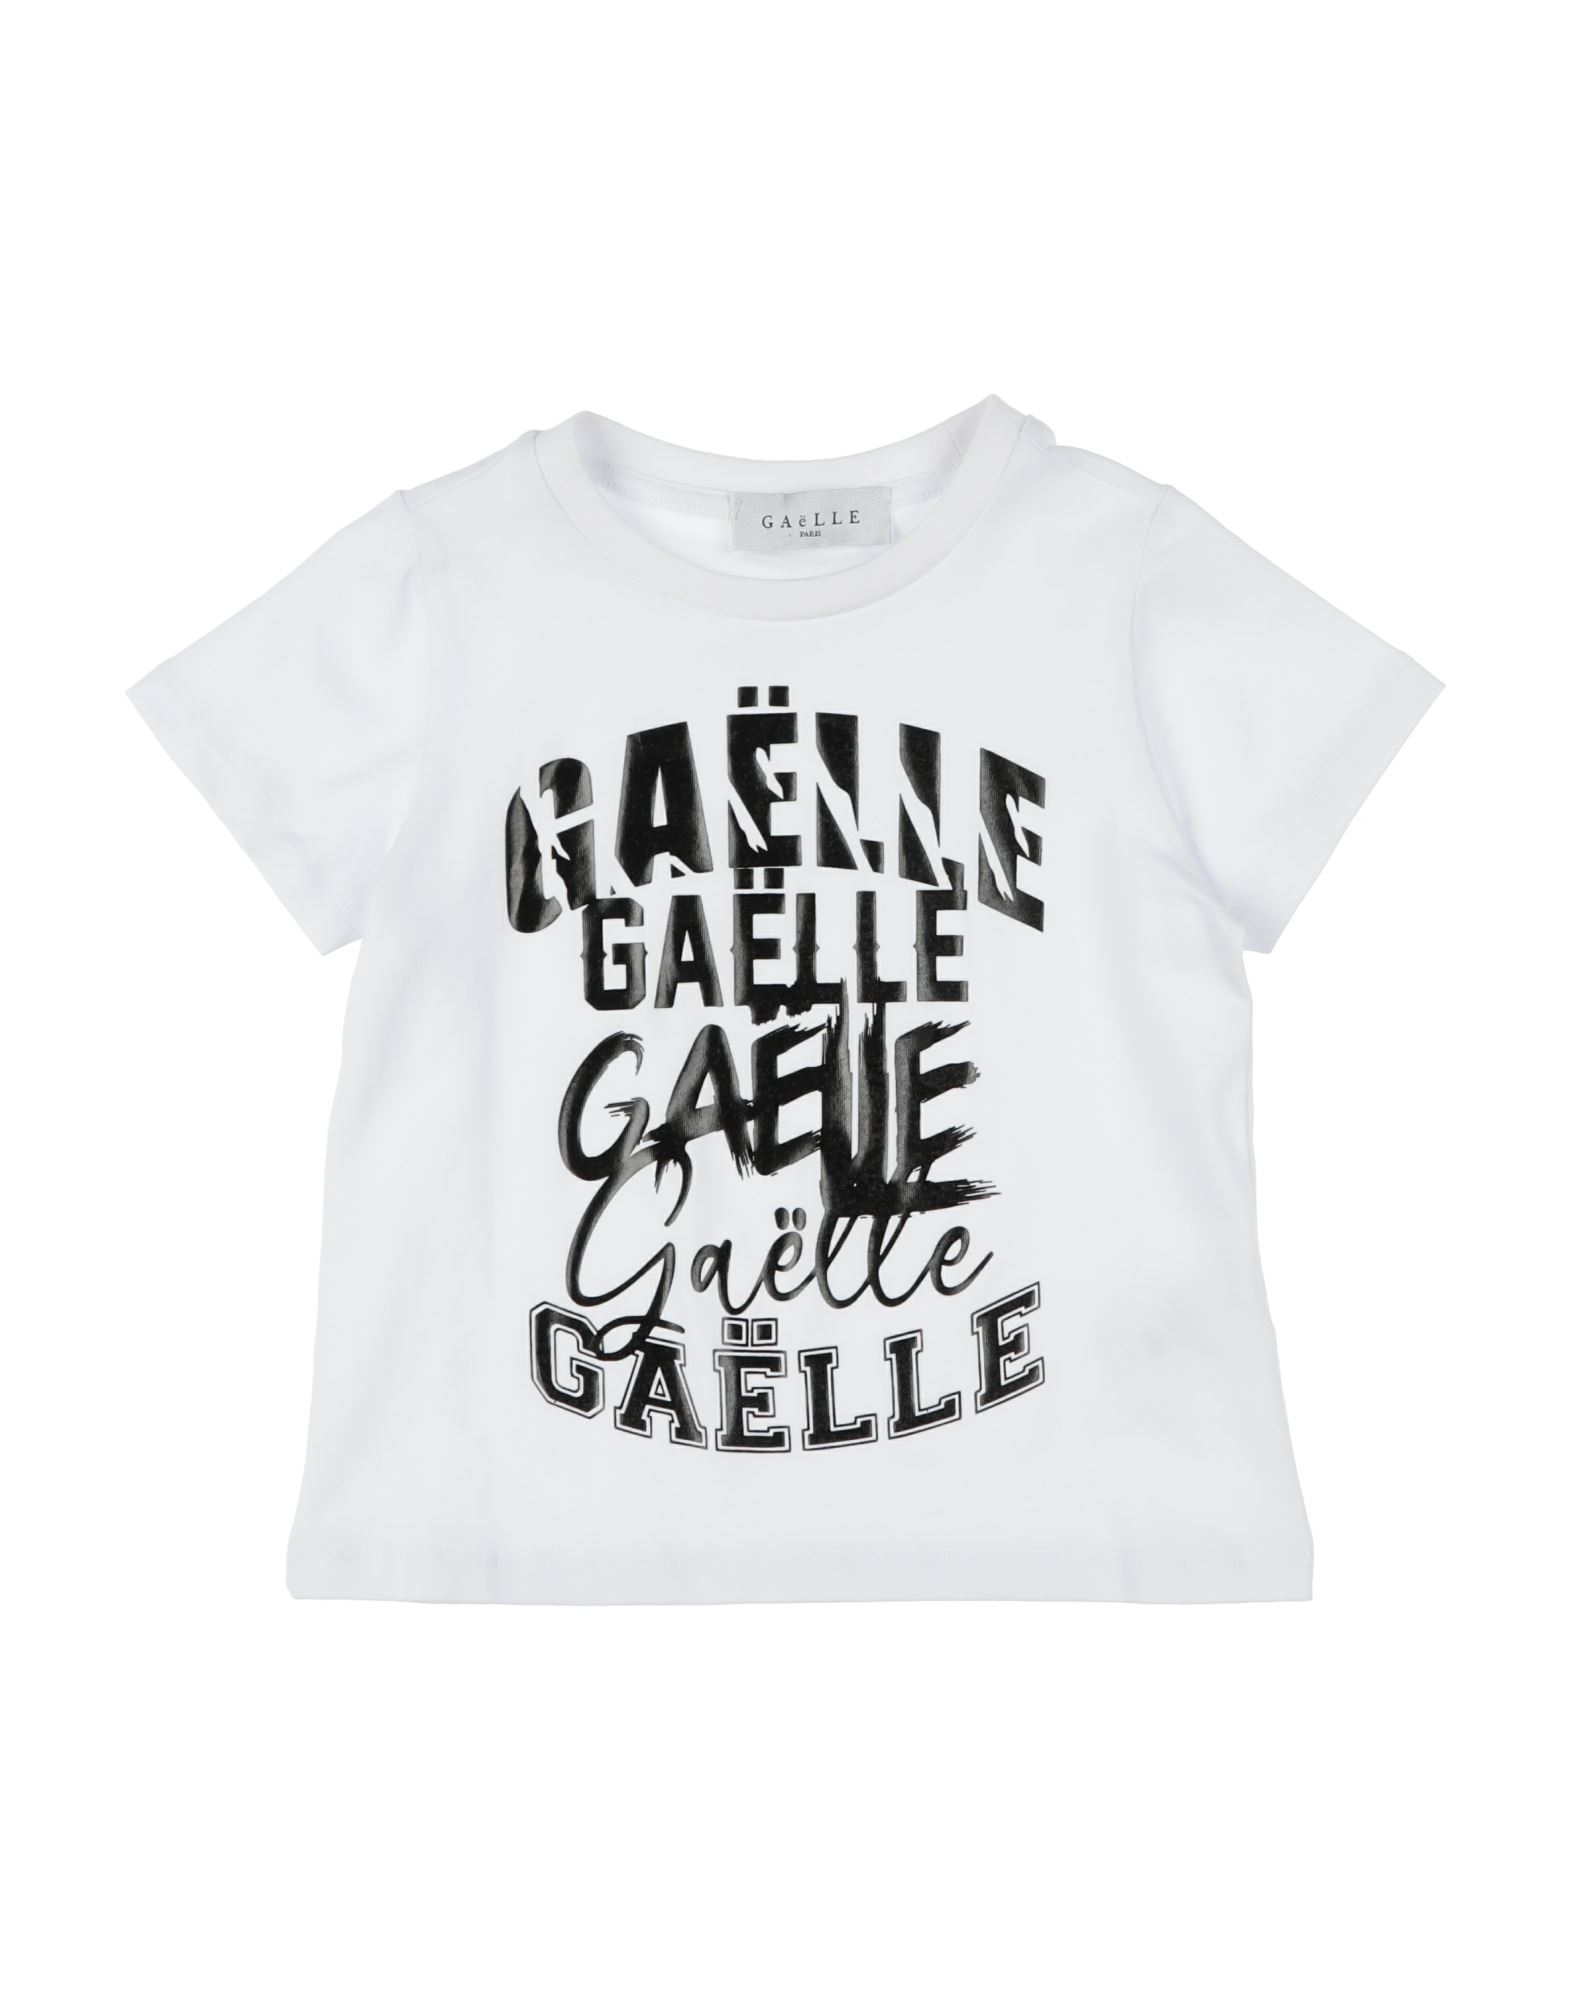 Gaelle Paris Kids' T-shirts In White